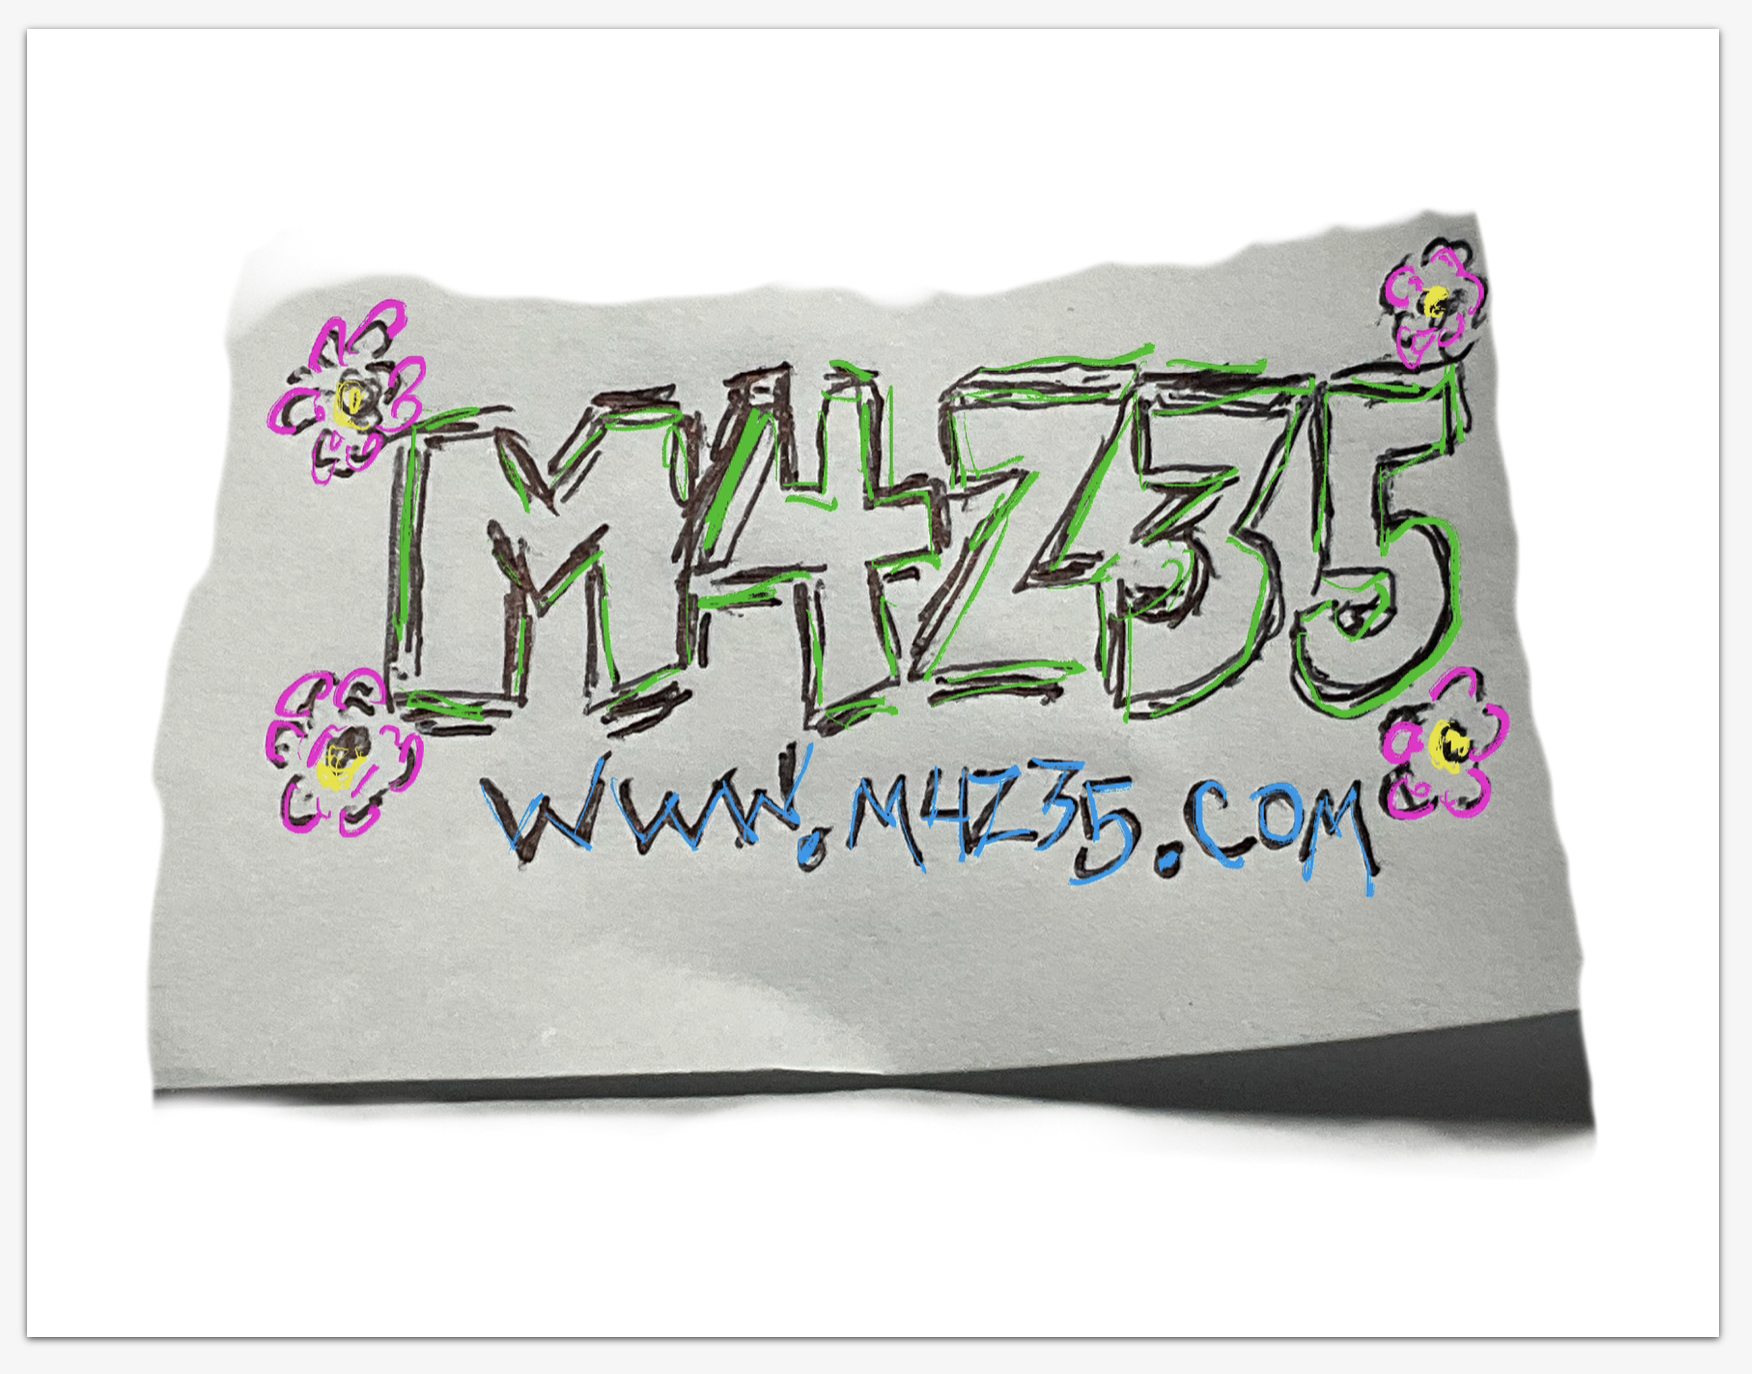 www.m4z35.com